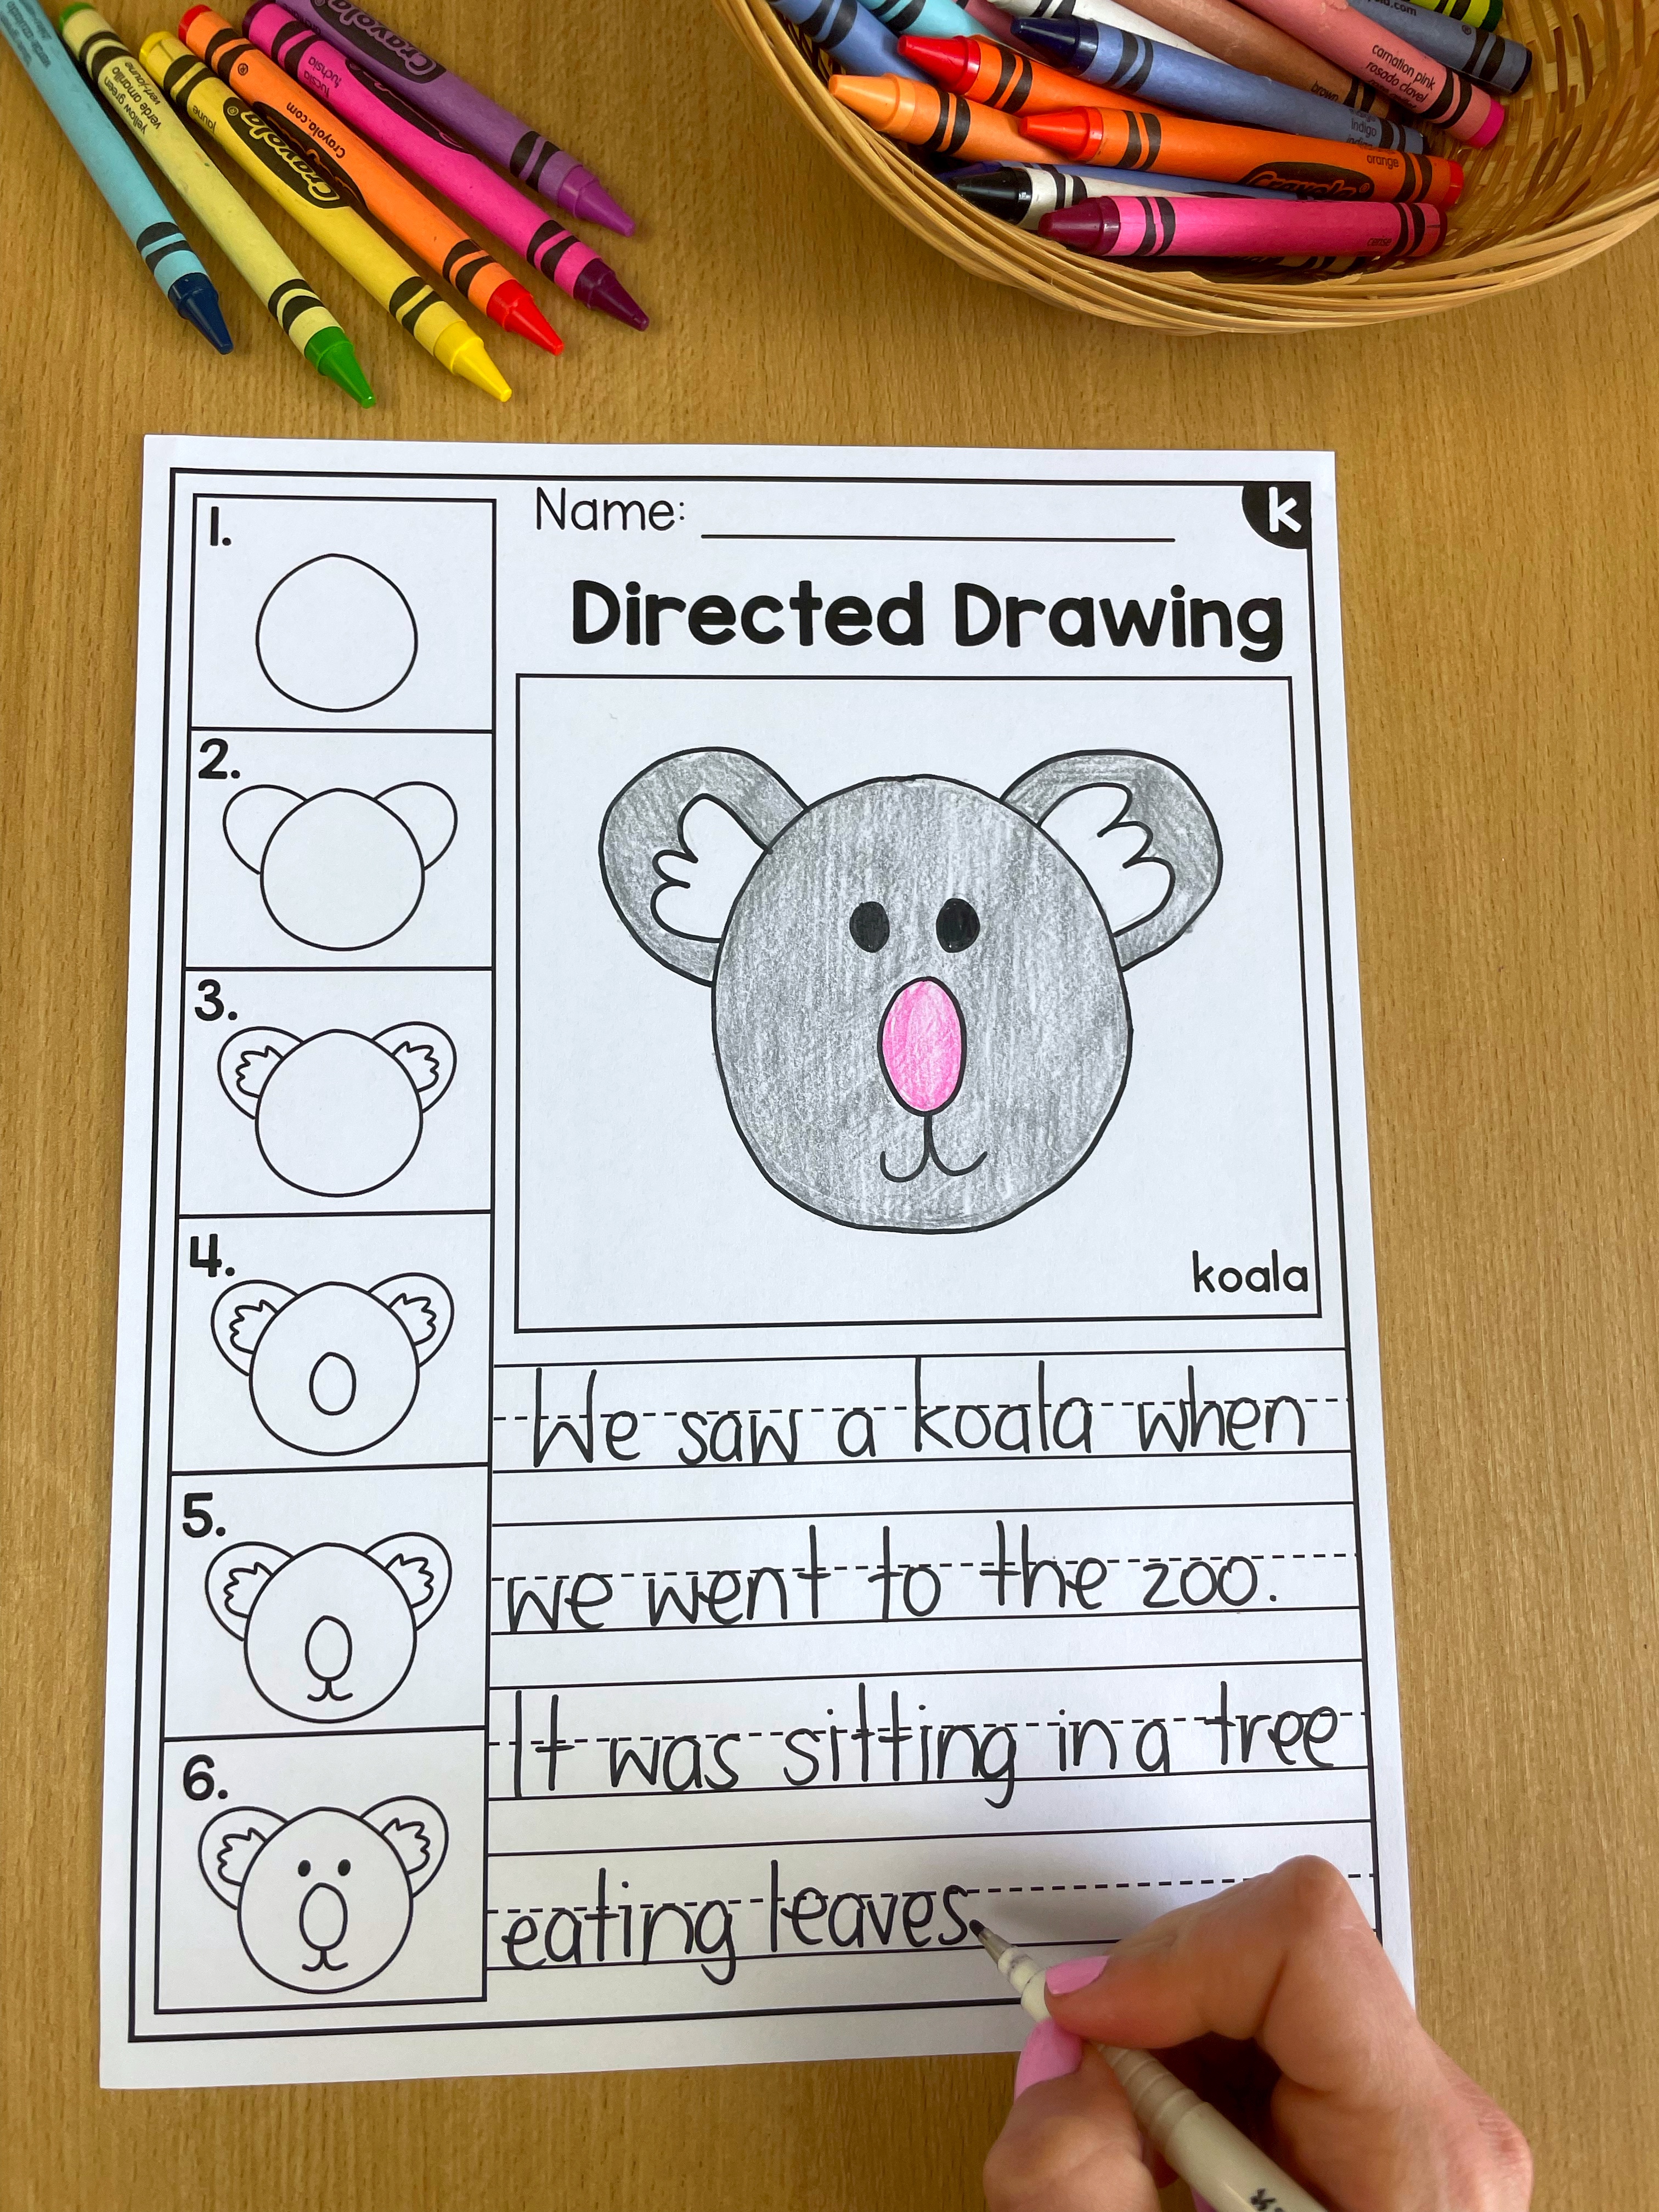 directed drawing of a koala